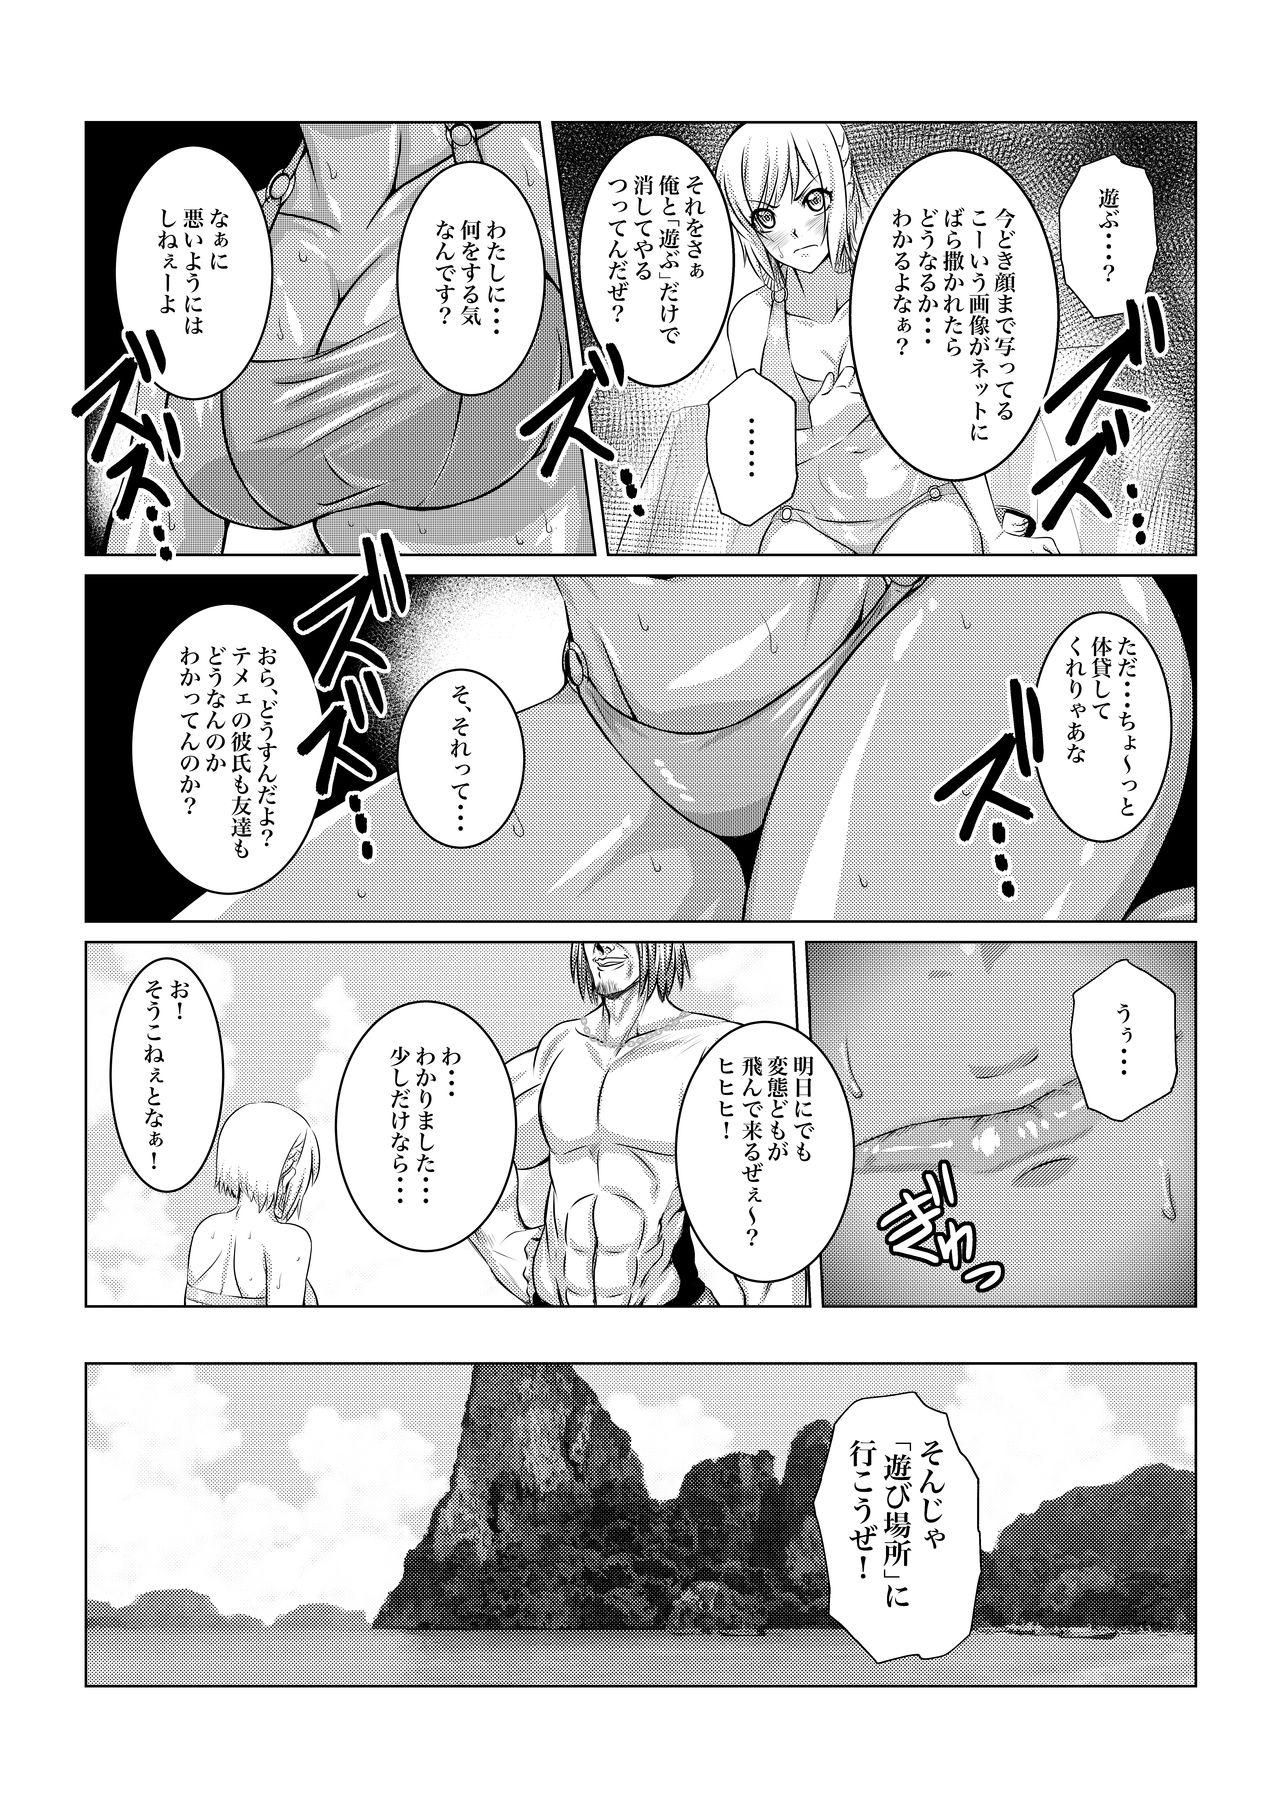  Gekka Midarezaki - Tales of vesperia Couch - Page 8